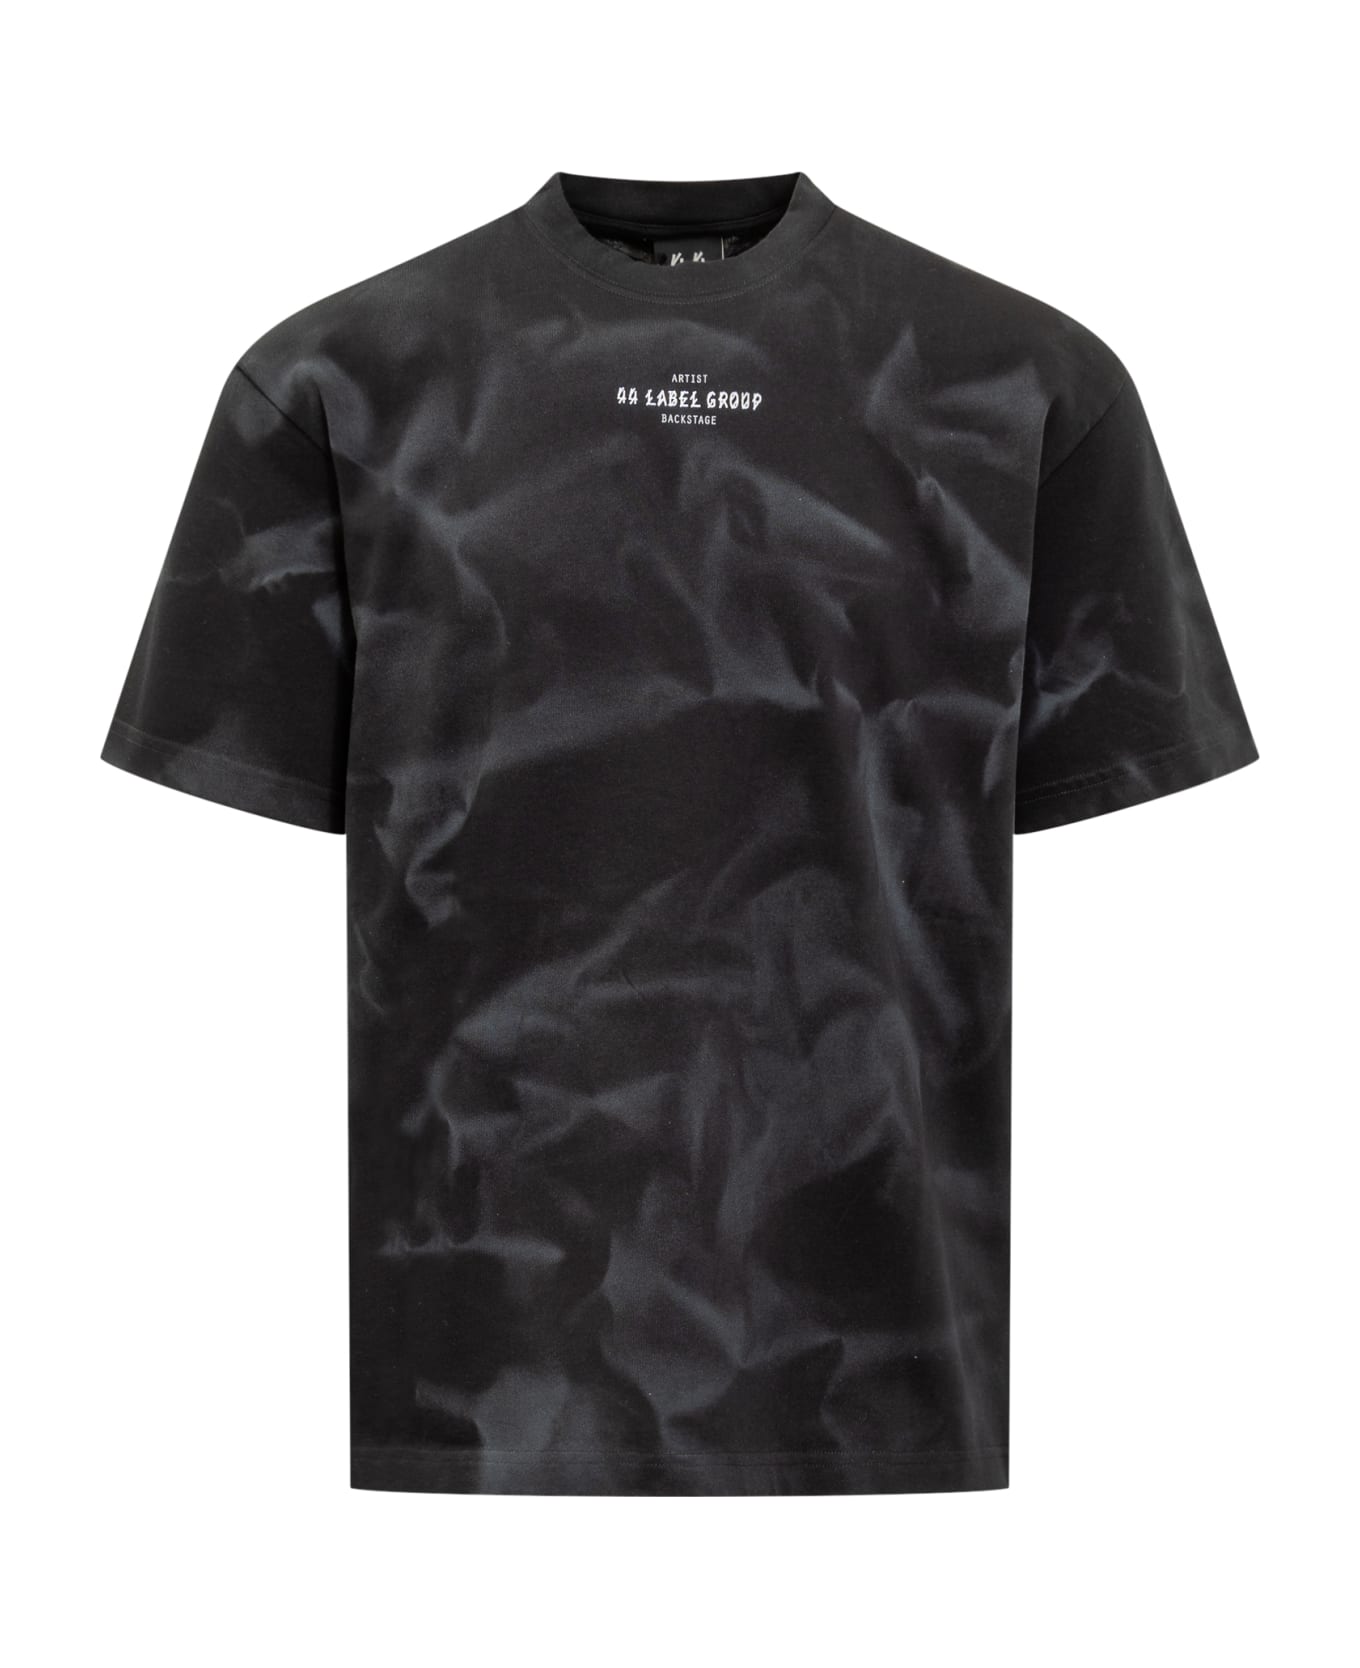 44 Label Group T-shirt With Smoke Effect - BLACK-SMOKE EFFECT シャツ